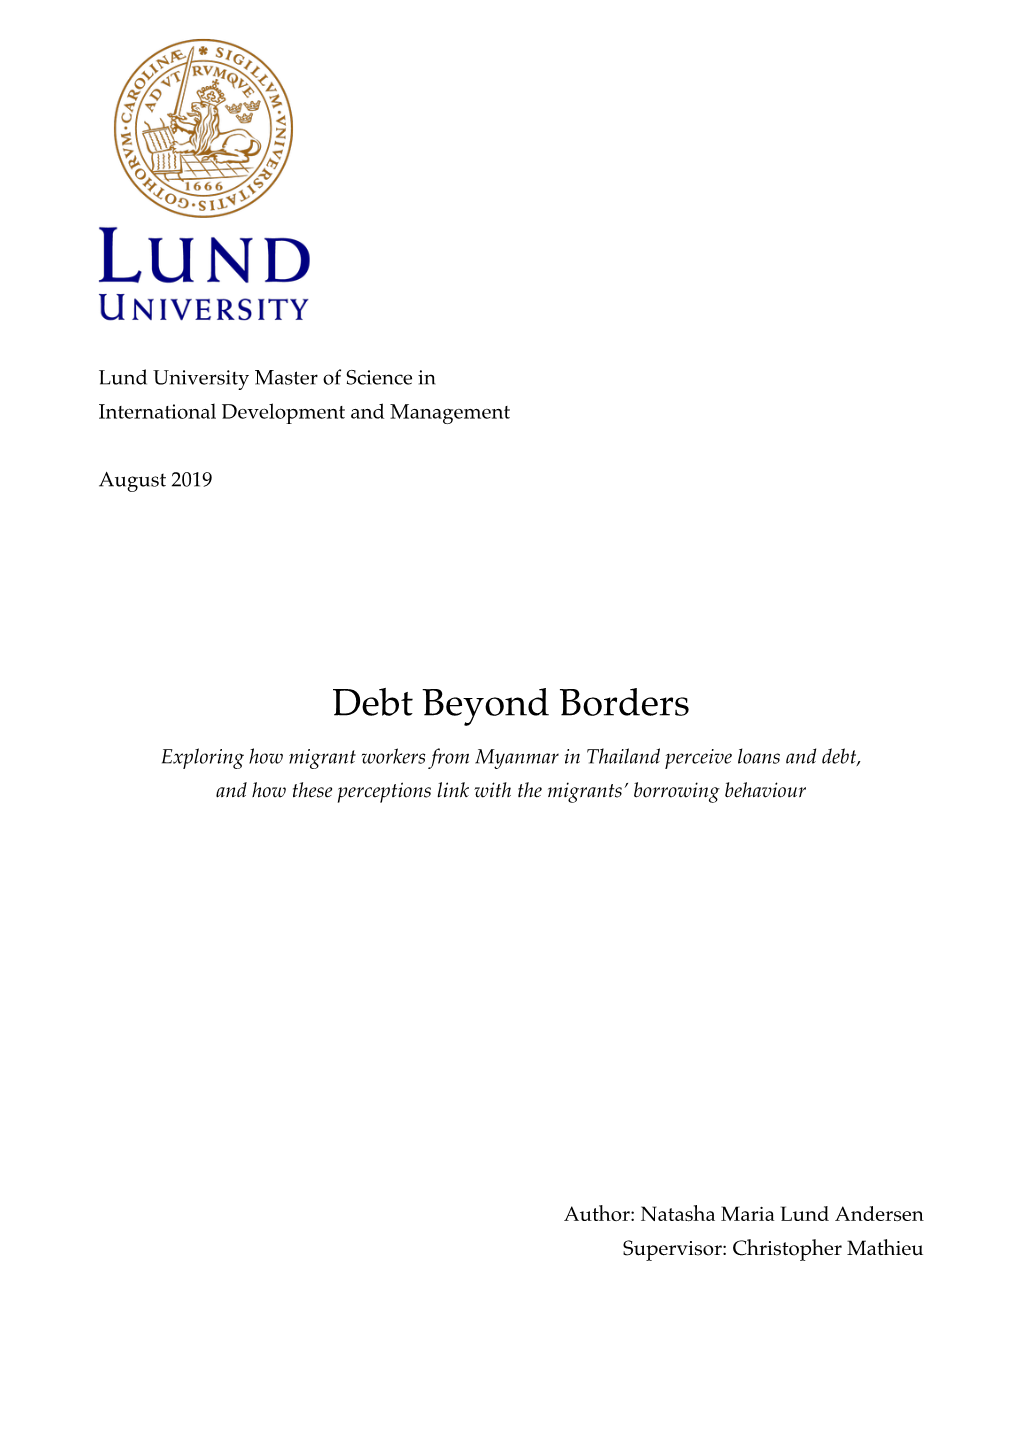 Debt Beyond Borders